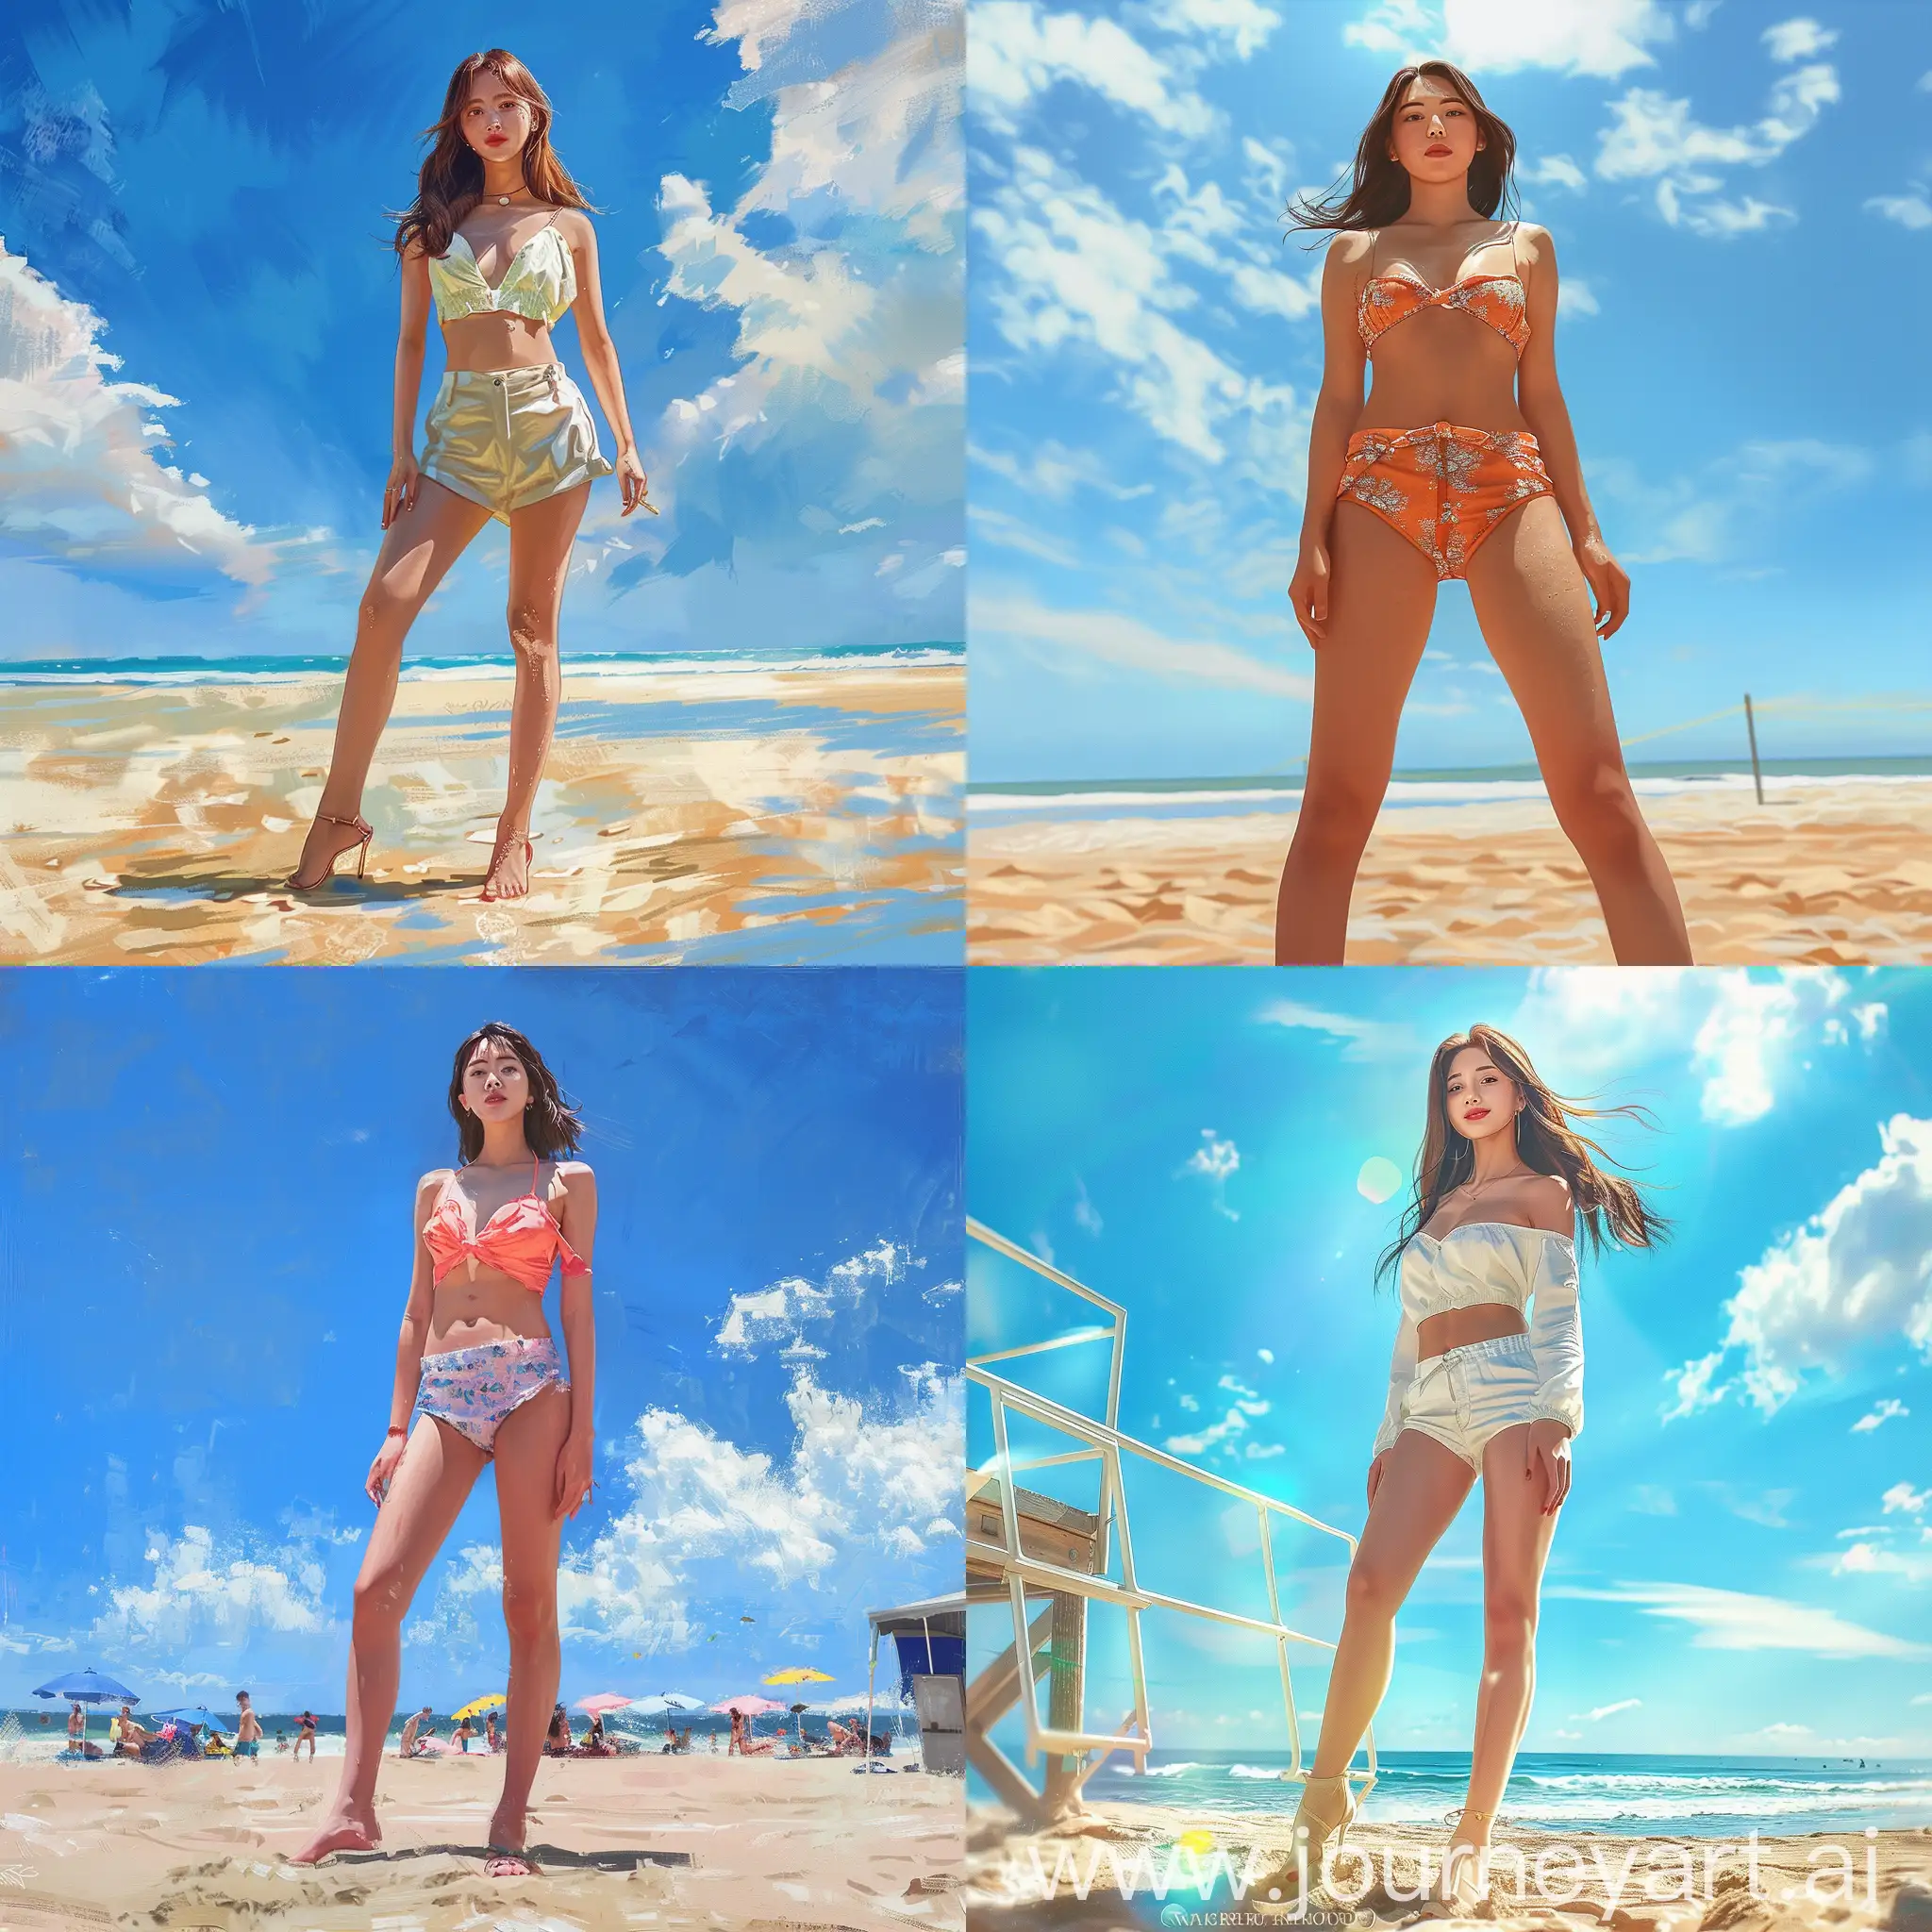 Stylish-Korean-Woman-Playfully-Enjoying-Sunny-Beach-Day